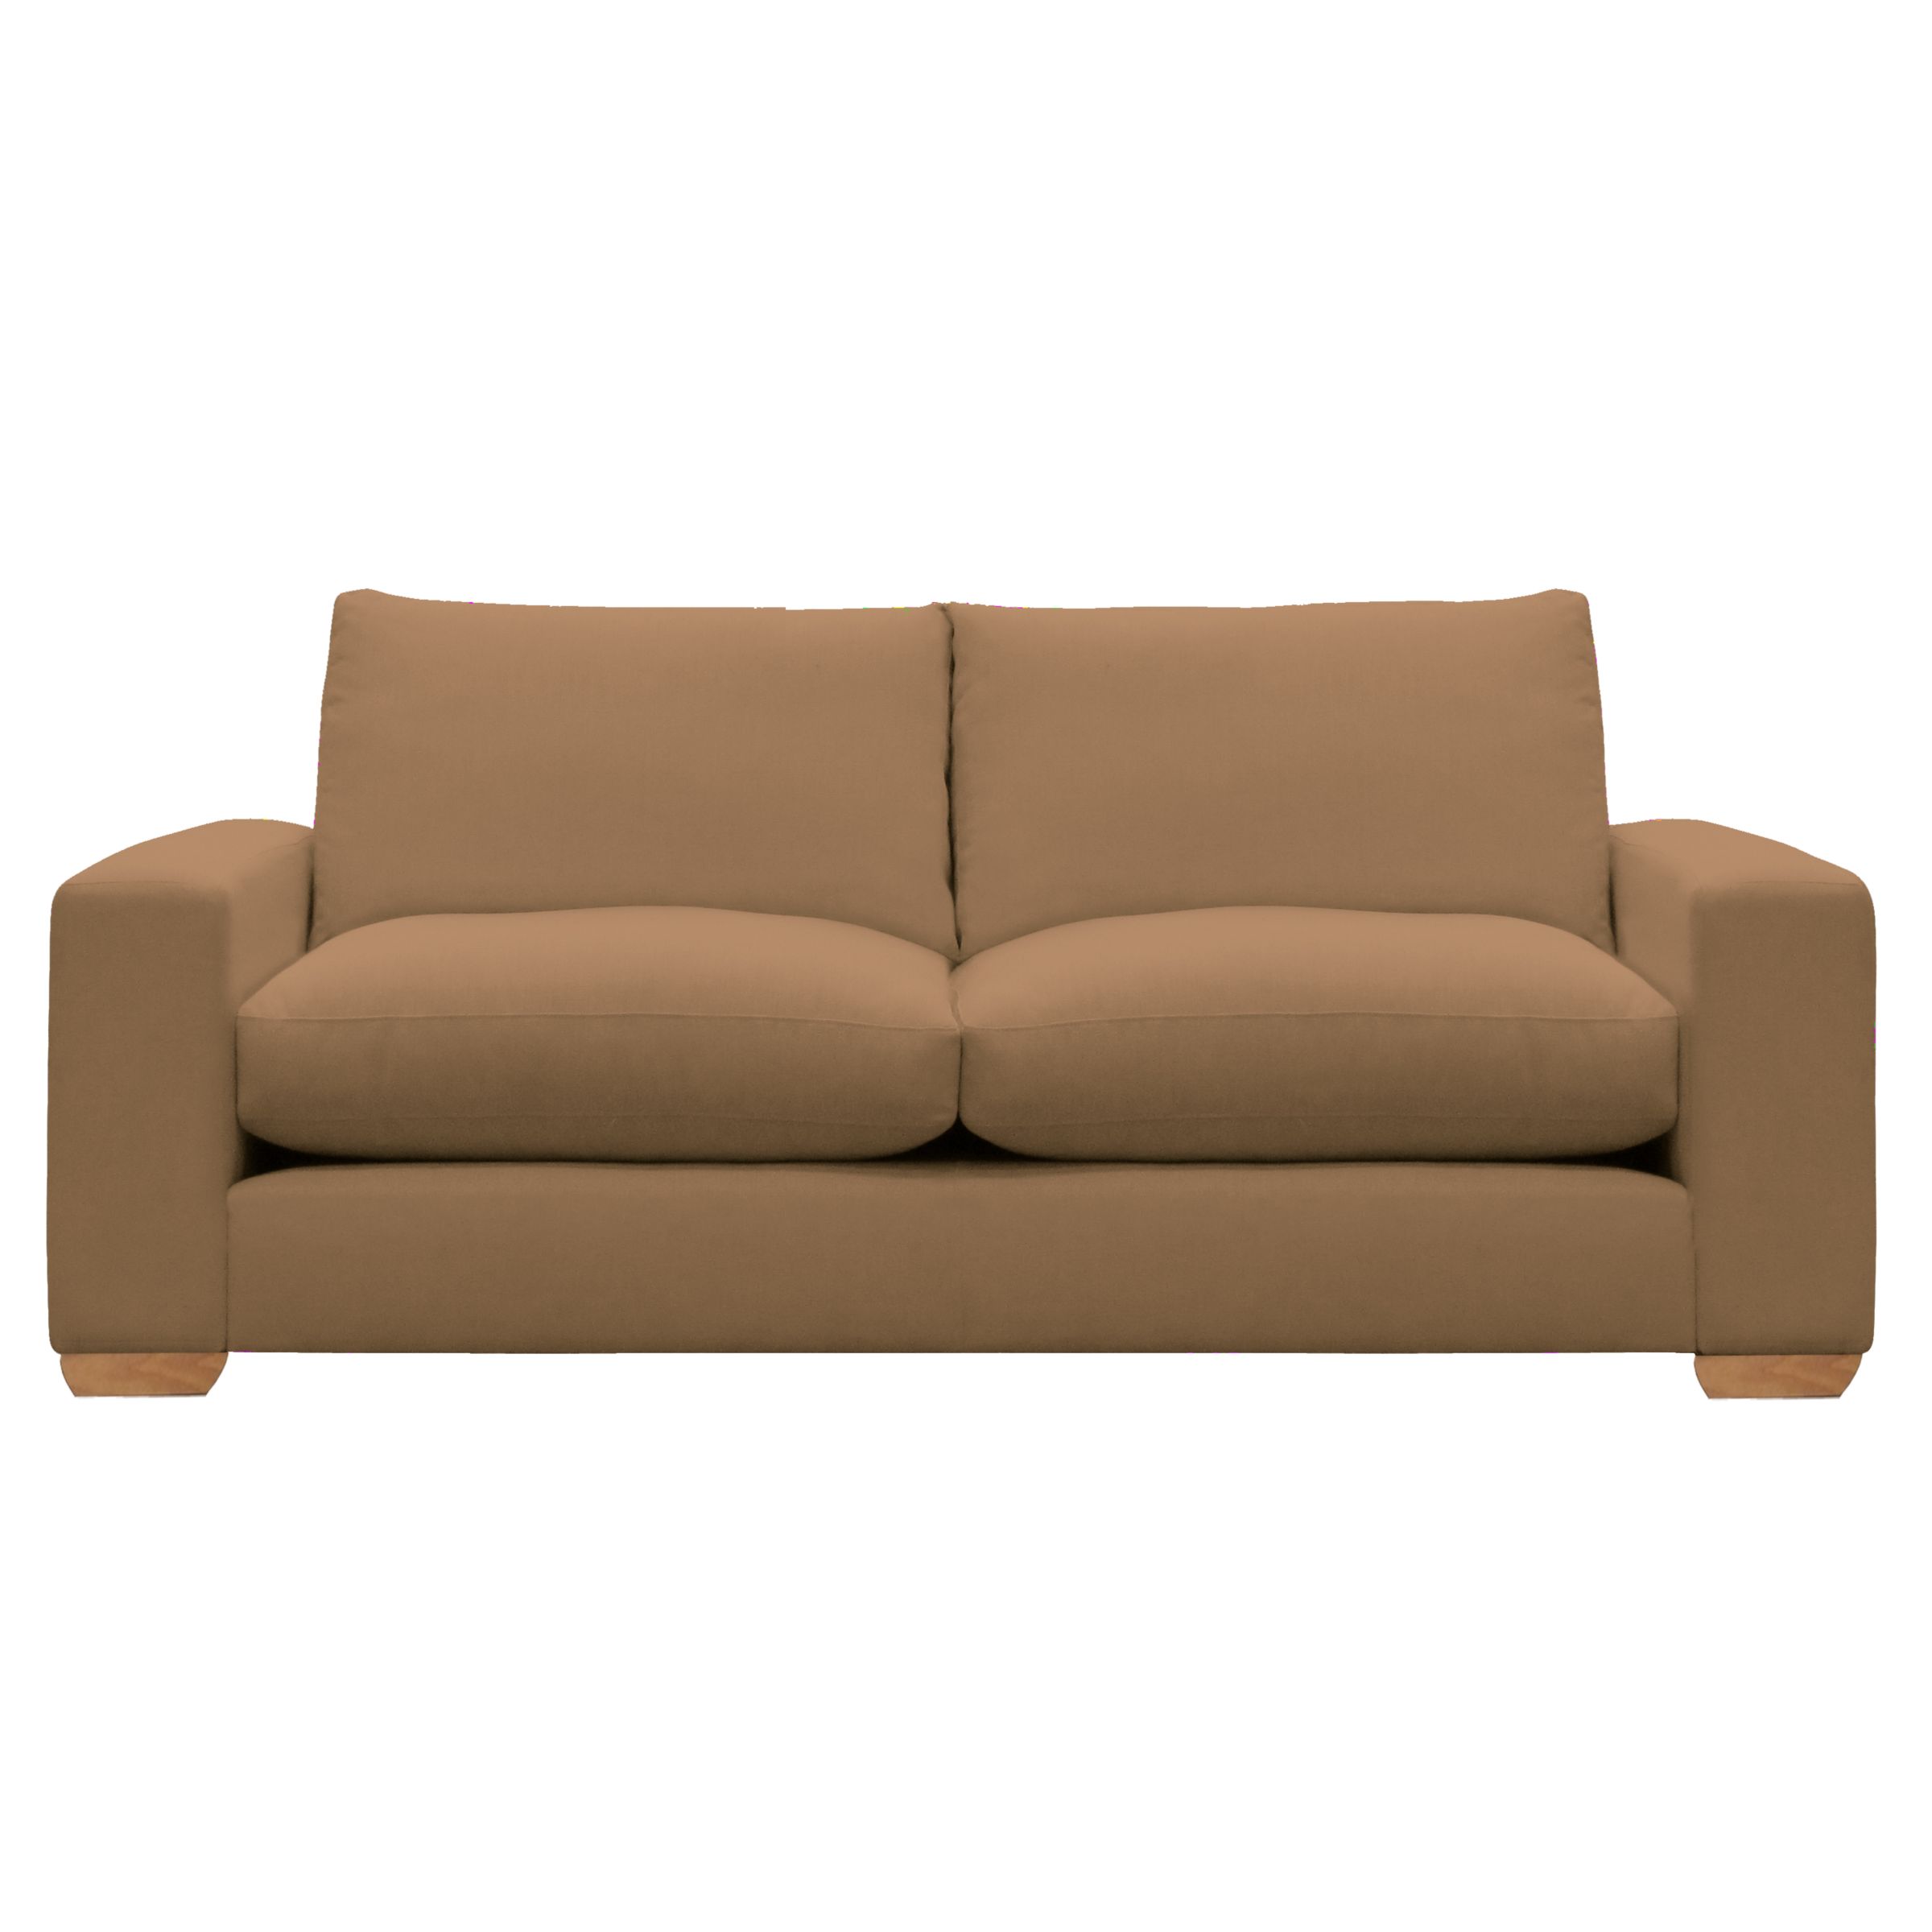 John Lewis Options Wide Arm Large Sofa, Linley Mushroom, width 200cm